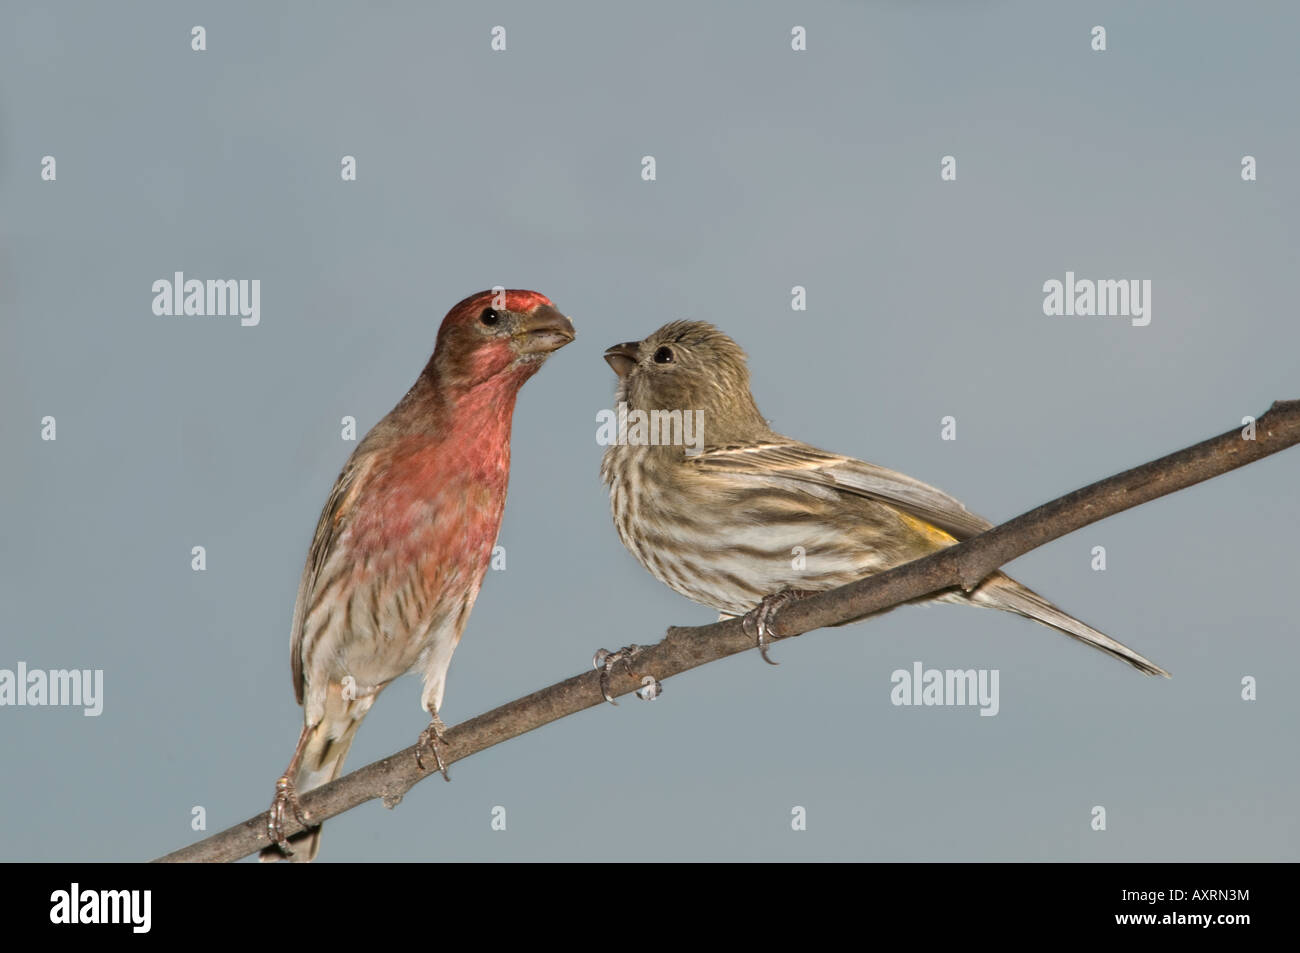 A pair of House Finches, Carpodacus mexicanus, go through a mating ritual where the male feeds the female. Oklahoma, USA. Stock Photo